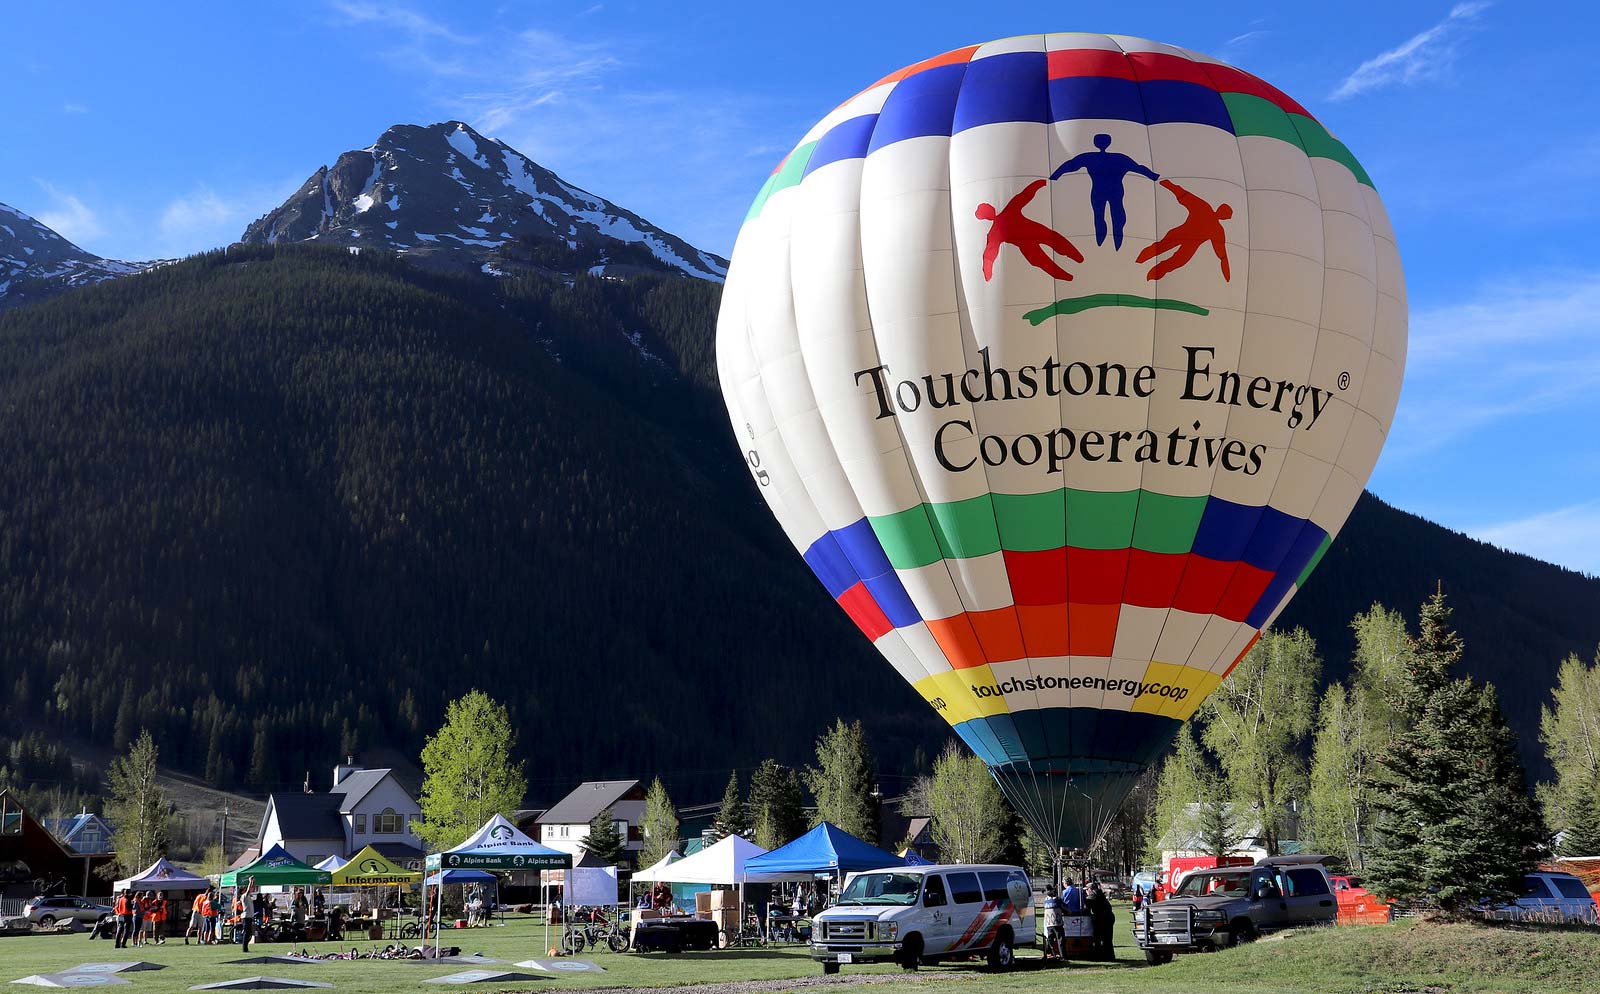 Touchstone Energy Cooperatives Hot Air Balloon